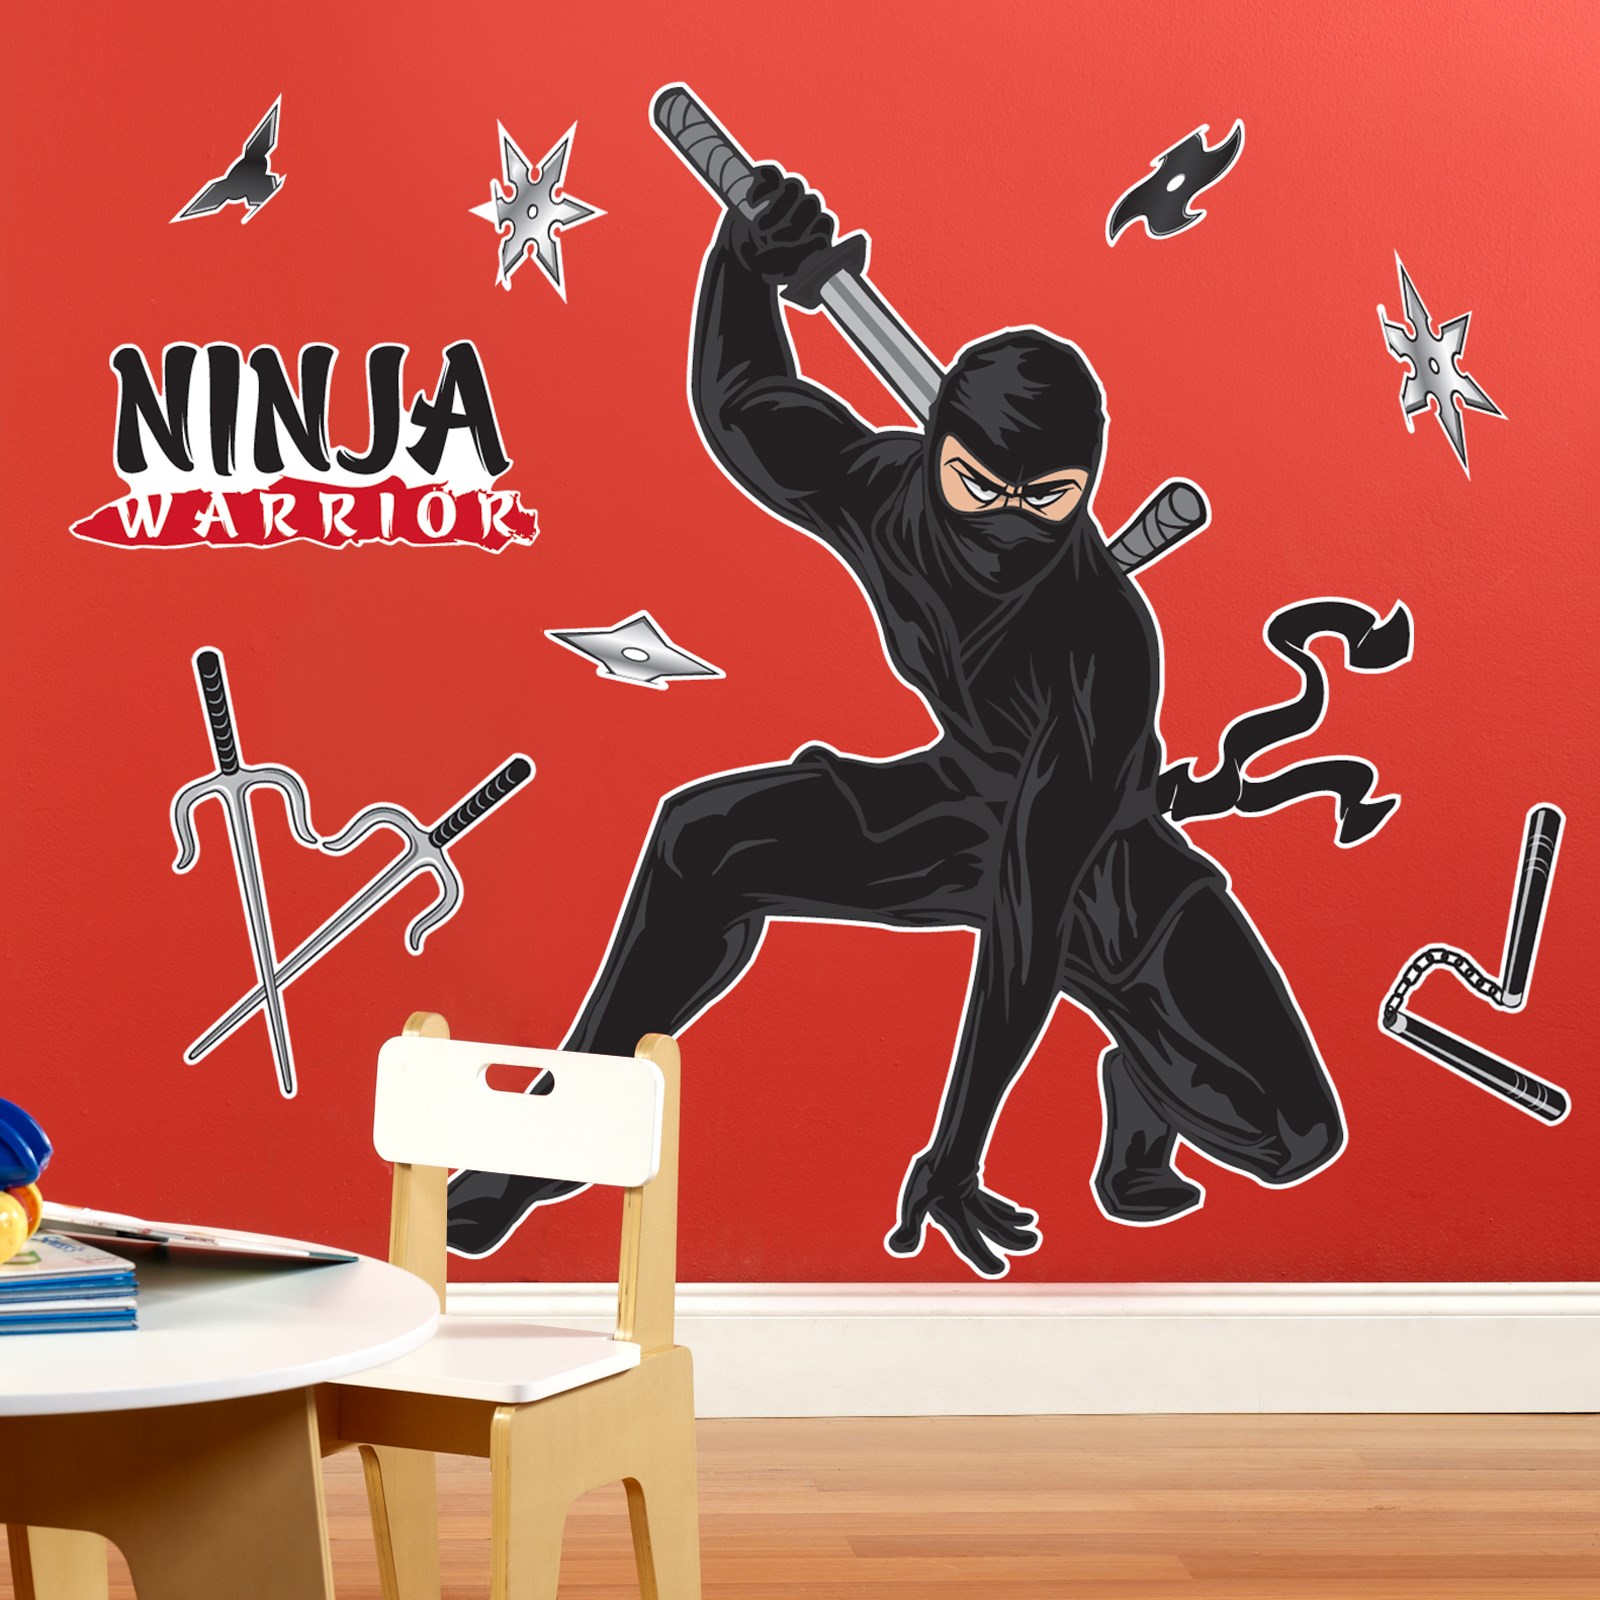 Ninja Warrior Party Giant Wall Decals: Ninja Birthday Party Ideas For Preschoolers